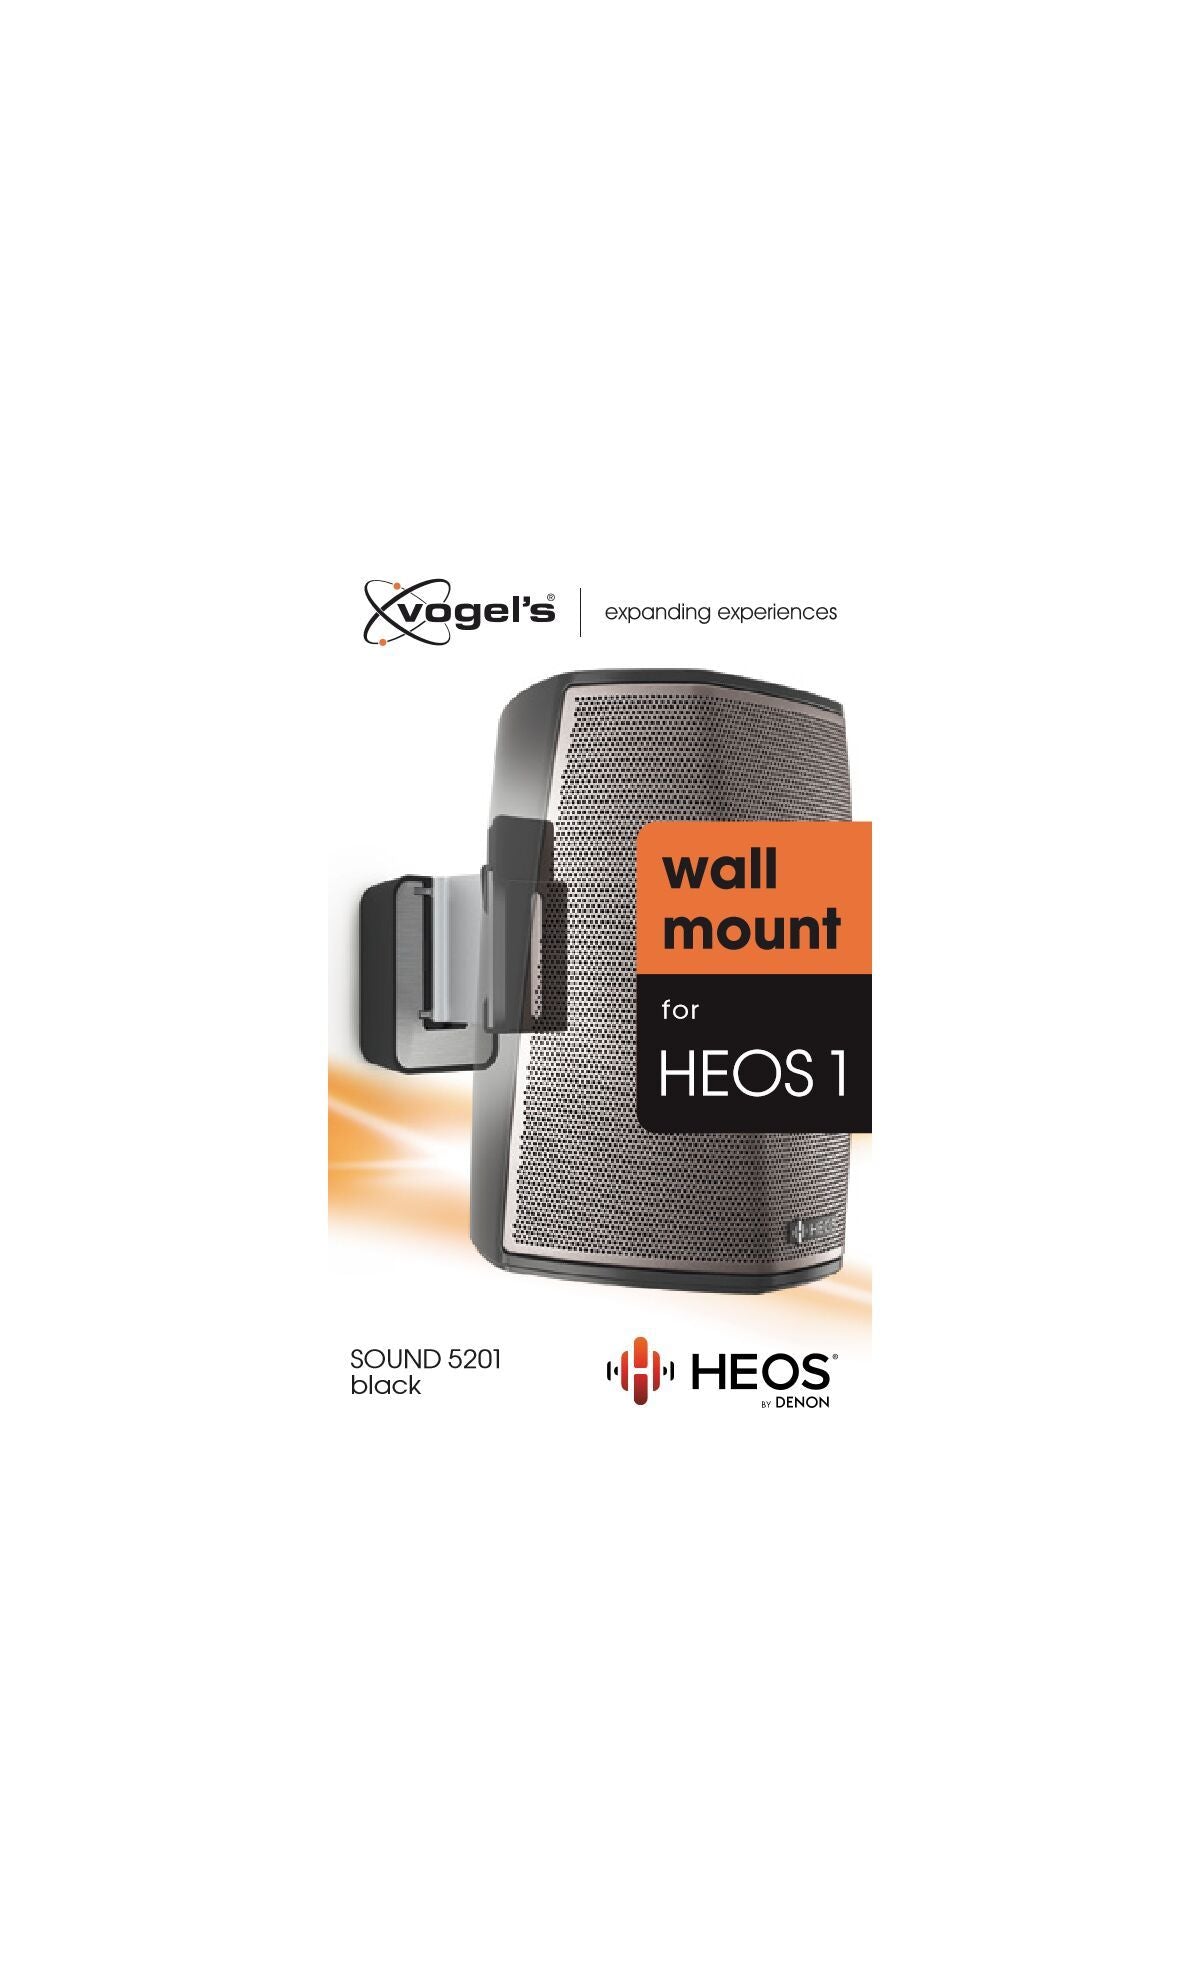 Vogel's SOUND 5201 Speaker Wall Mount for Denon HEOS 1